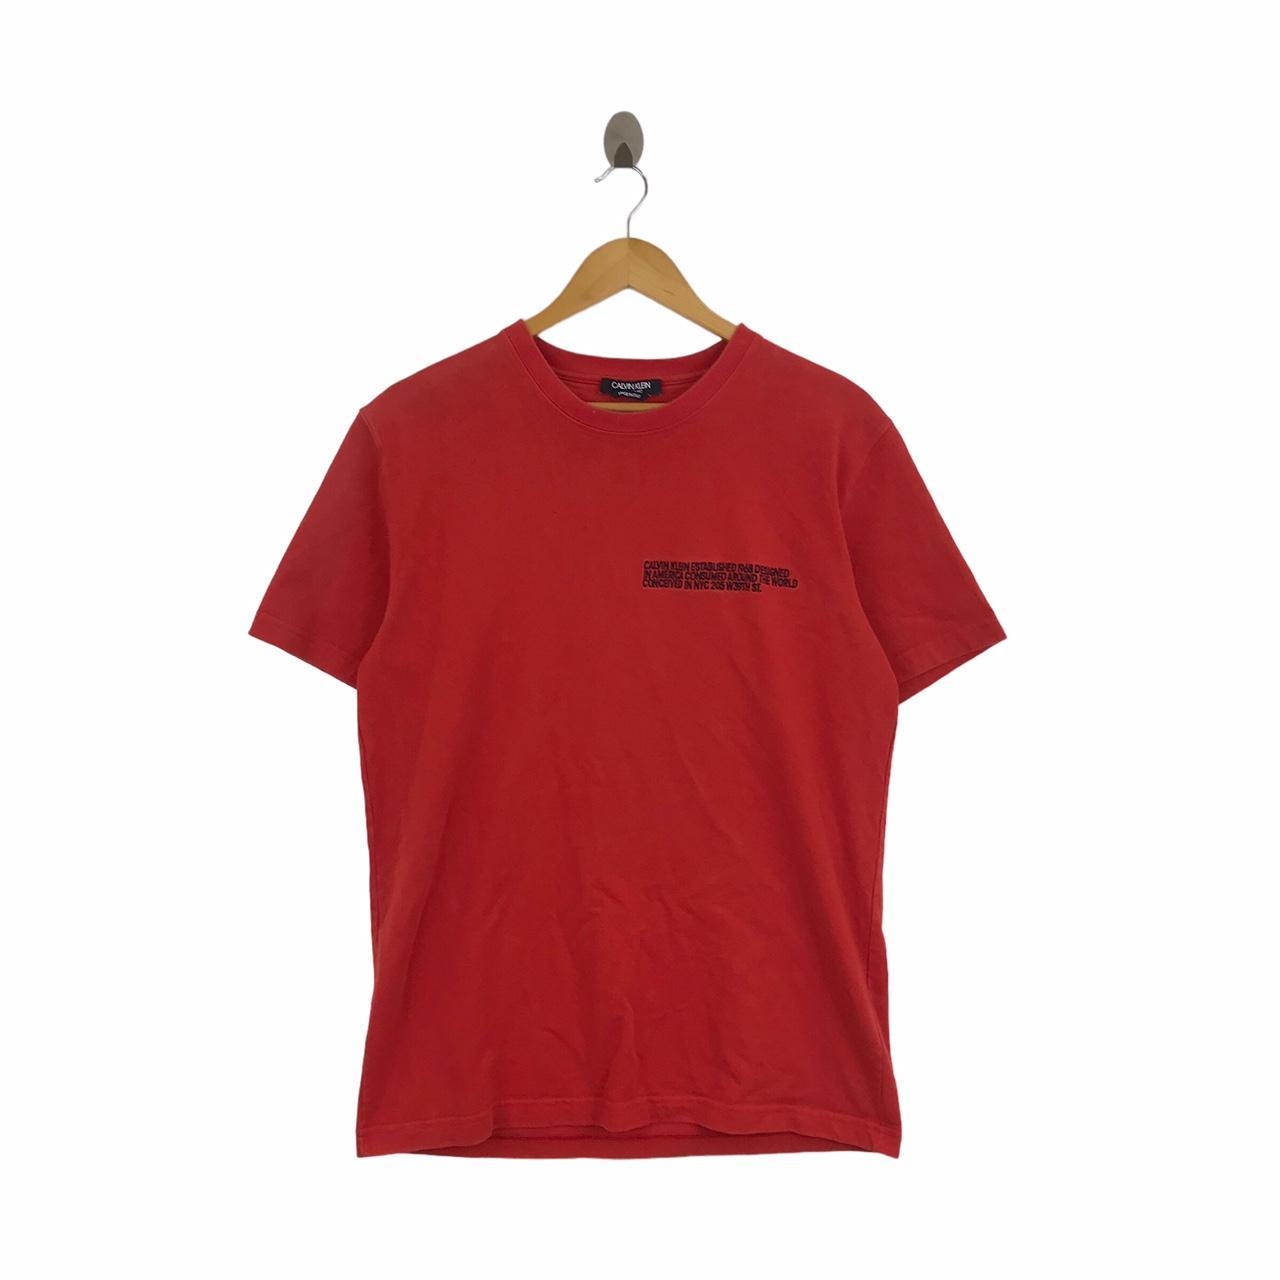 Calvin Klein Men's Red T-Shirt